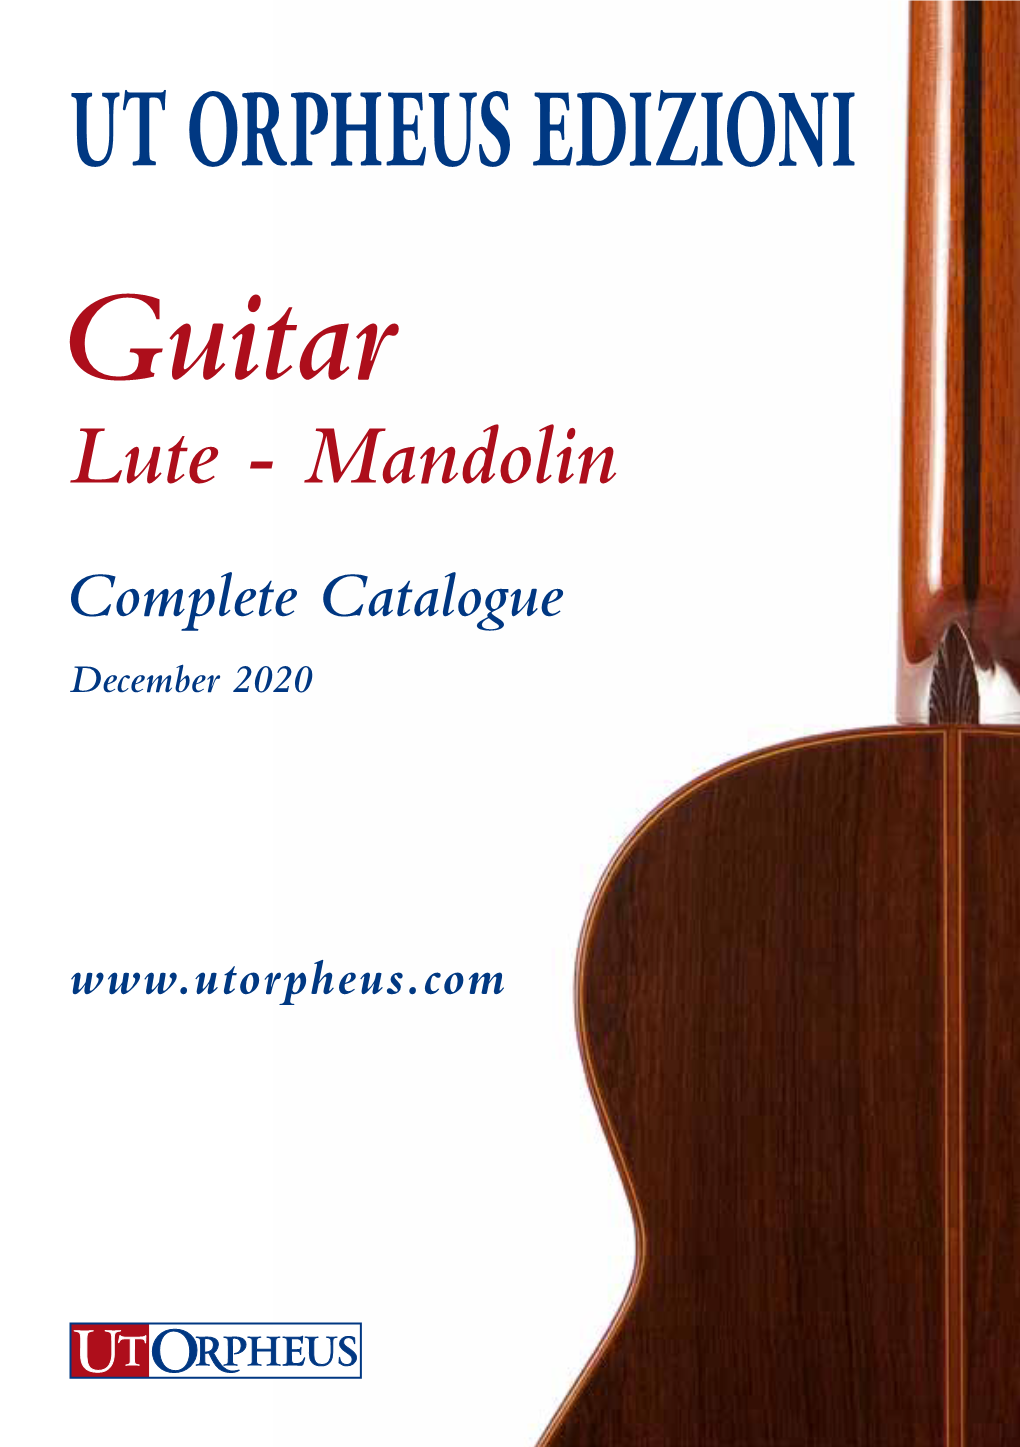 Guitar Lute - Mandolin Complete Catalogue December 2020